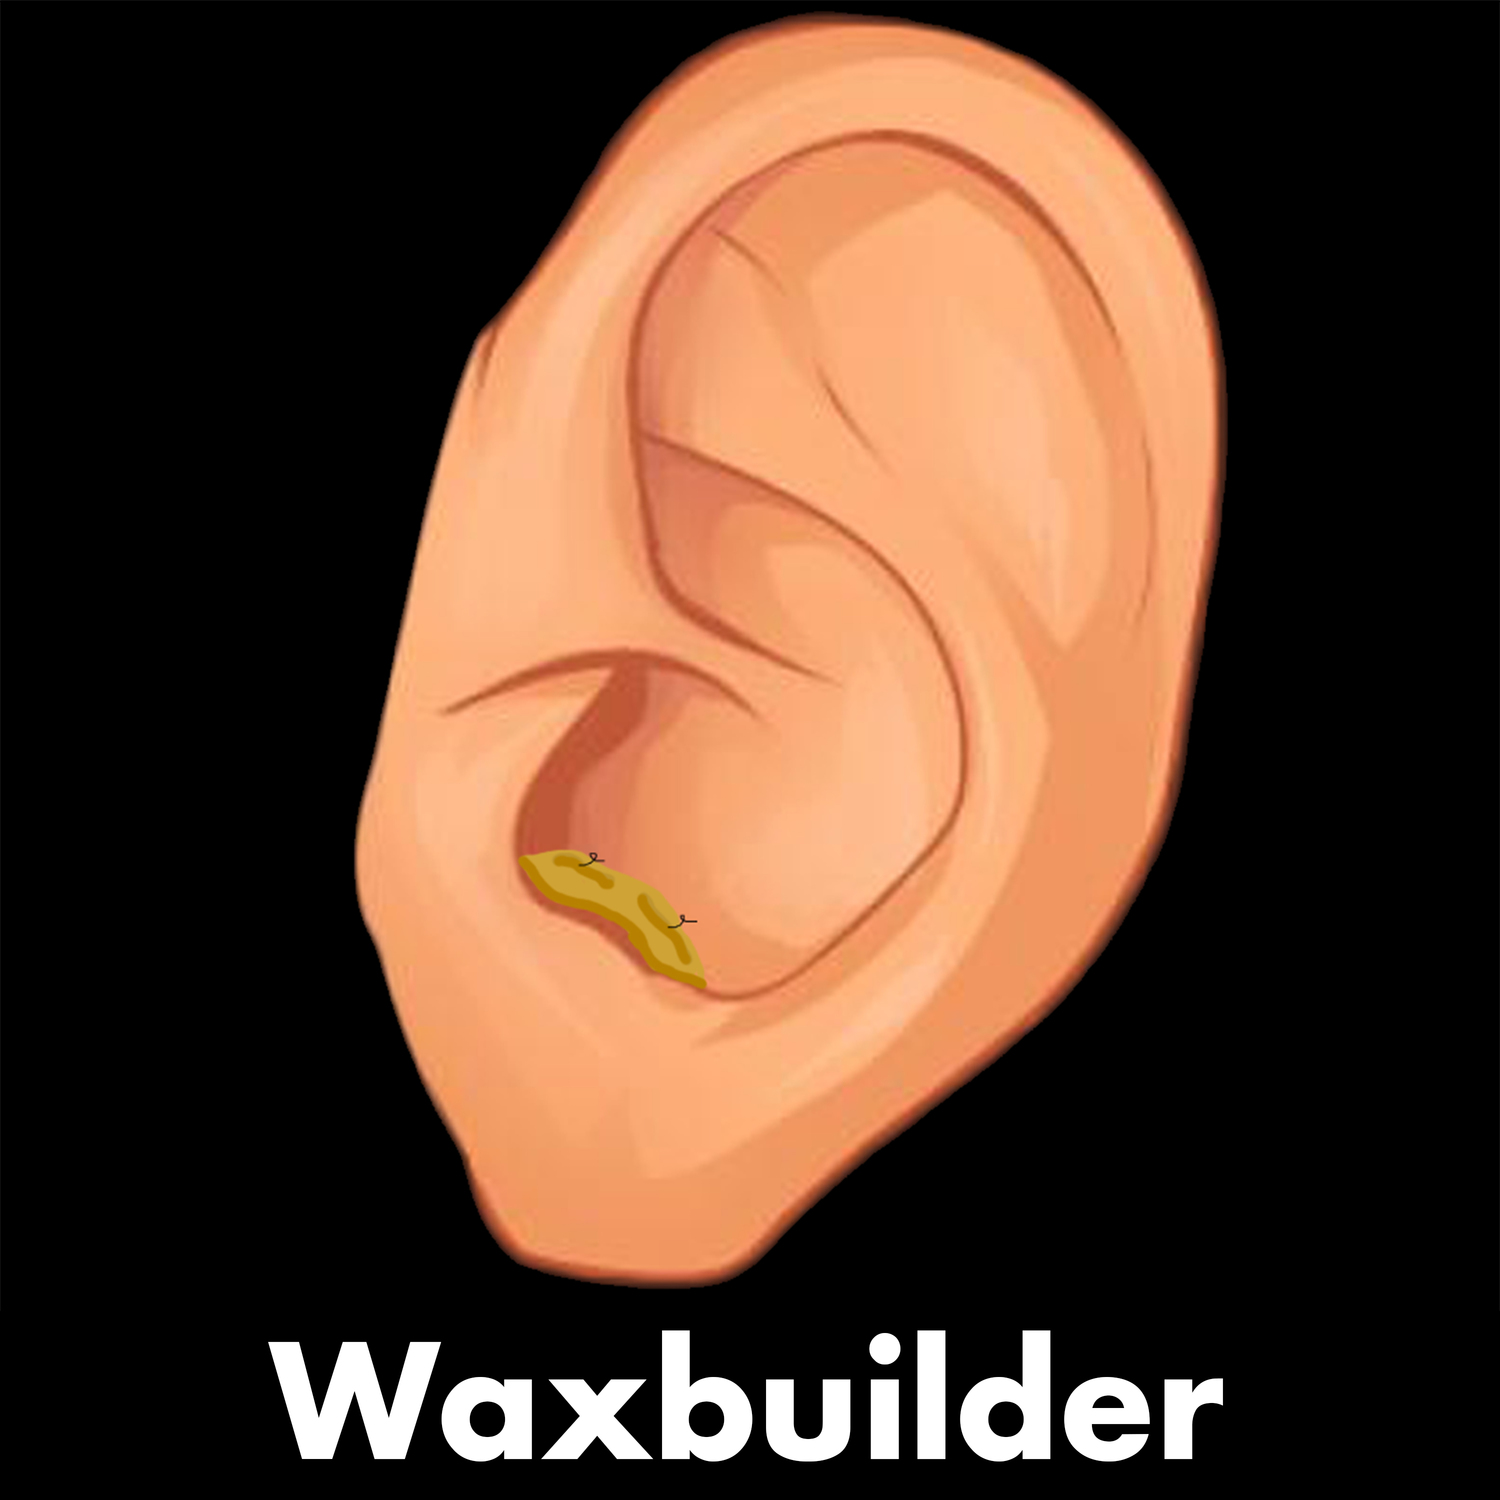 Waxbuilder - Waxbuilder